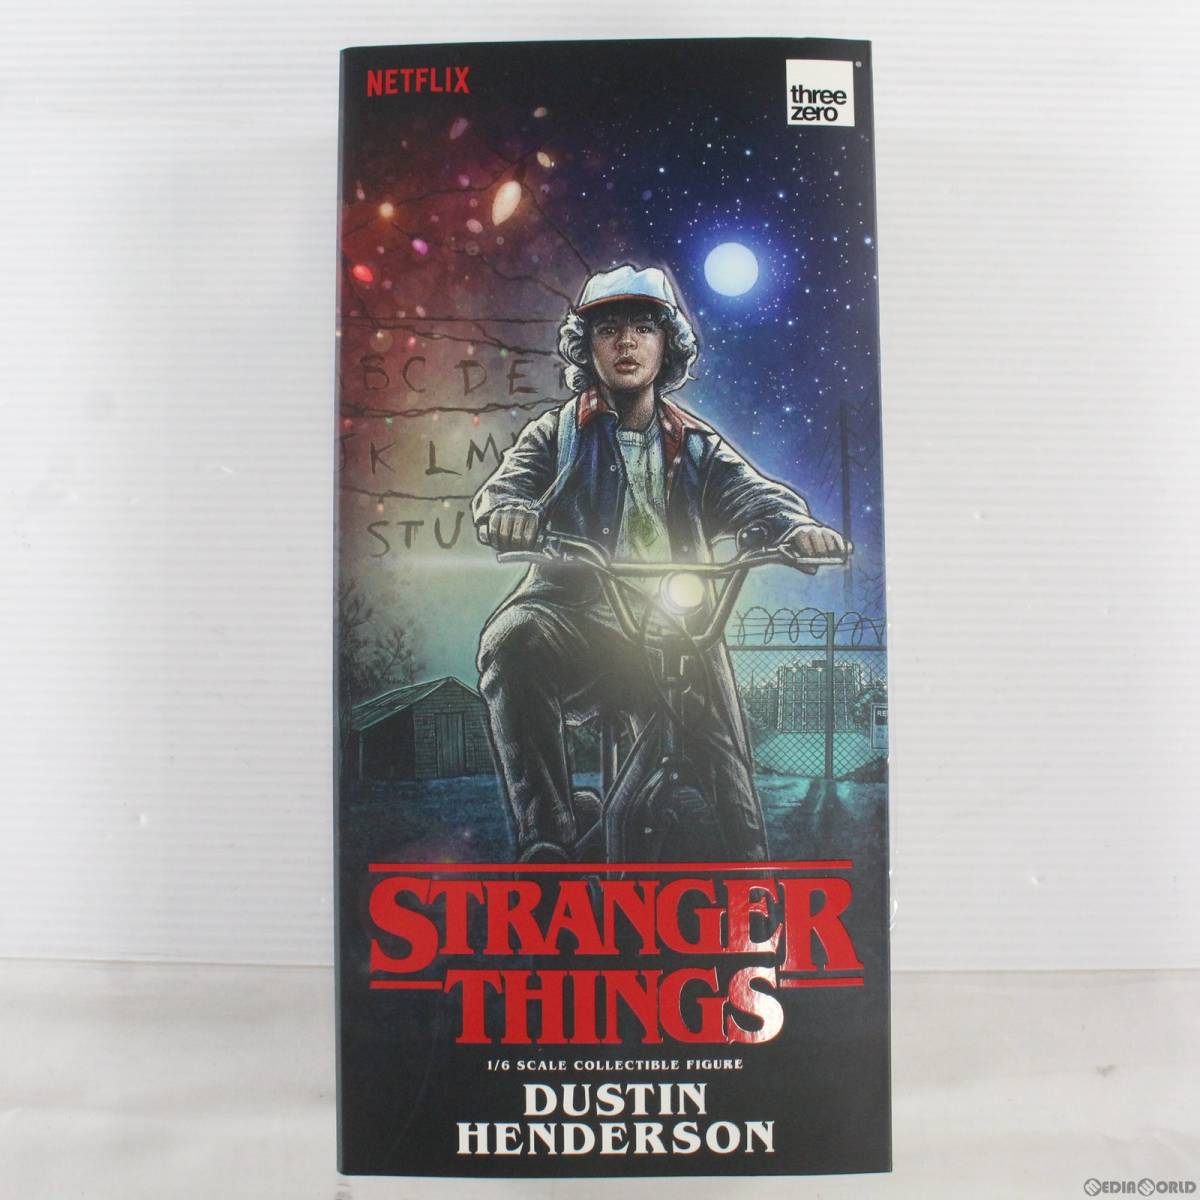 [FIG]1/6 Dustin Henderson(1/6 ダスティン・ヘンダーソン) Stranger